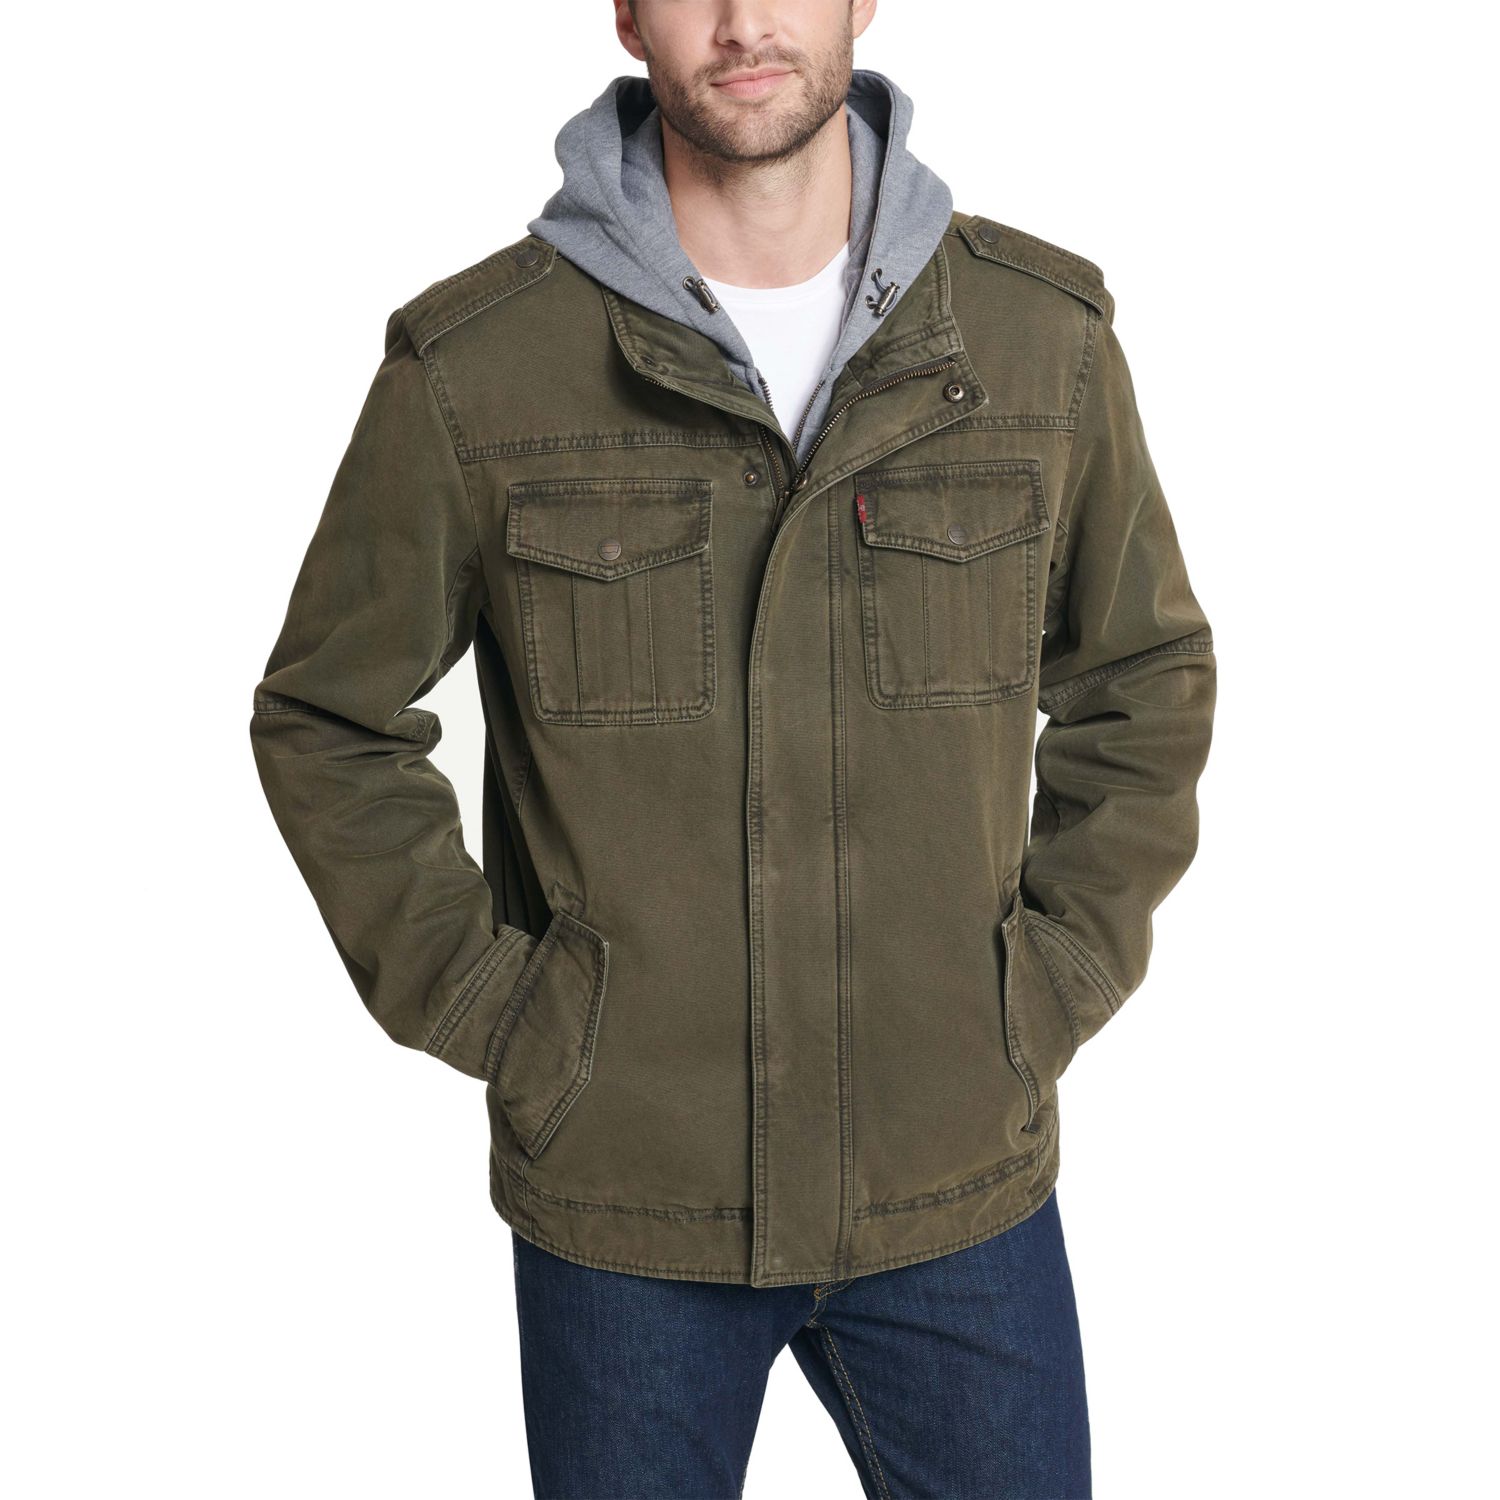 levi's men's sherpa lined denim jacket